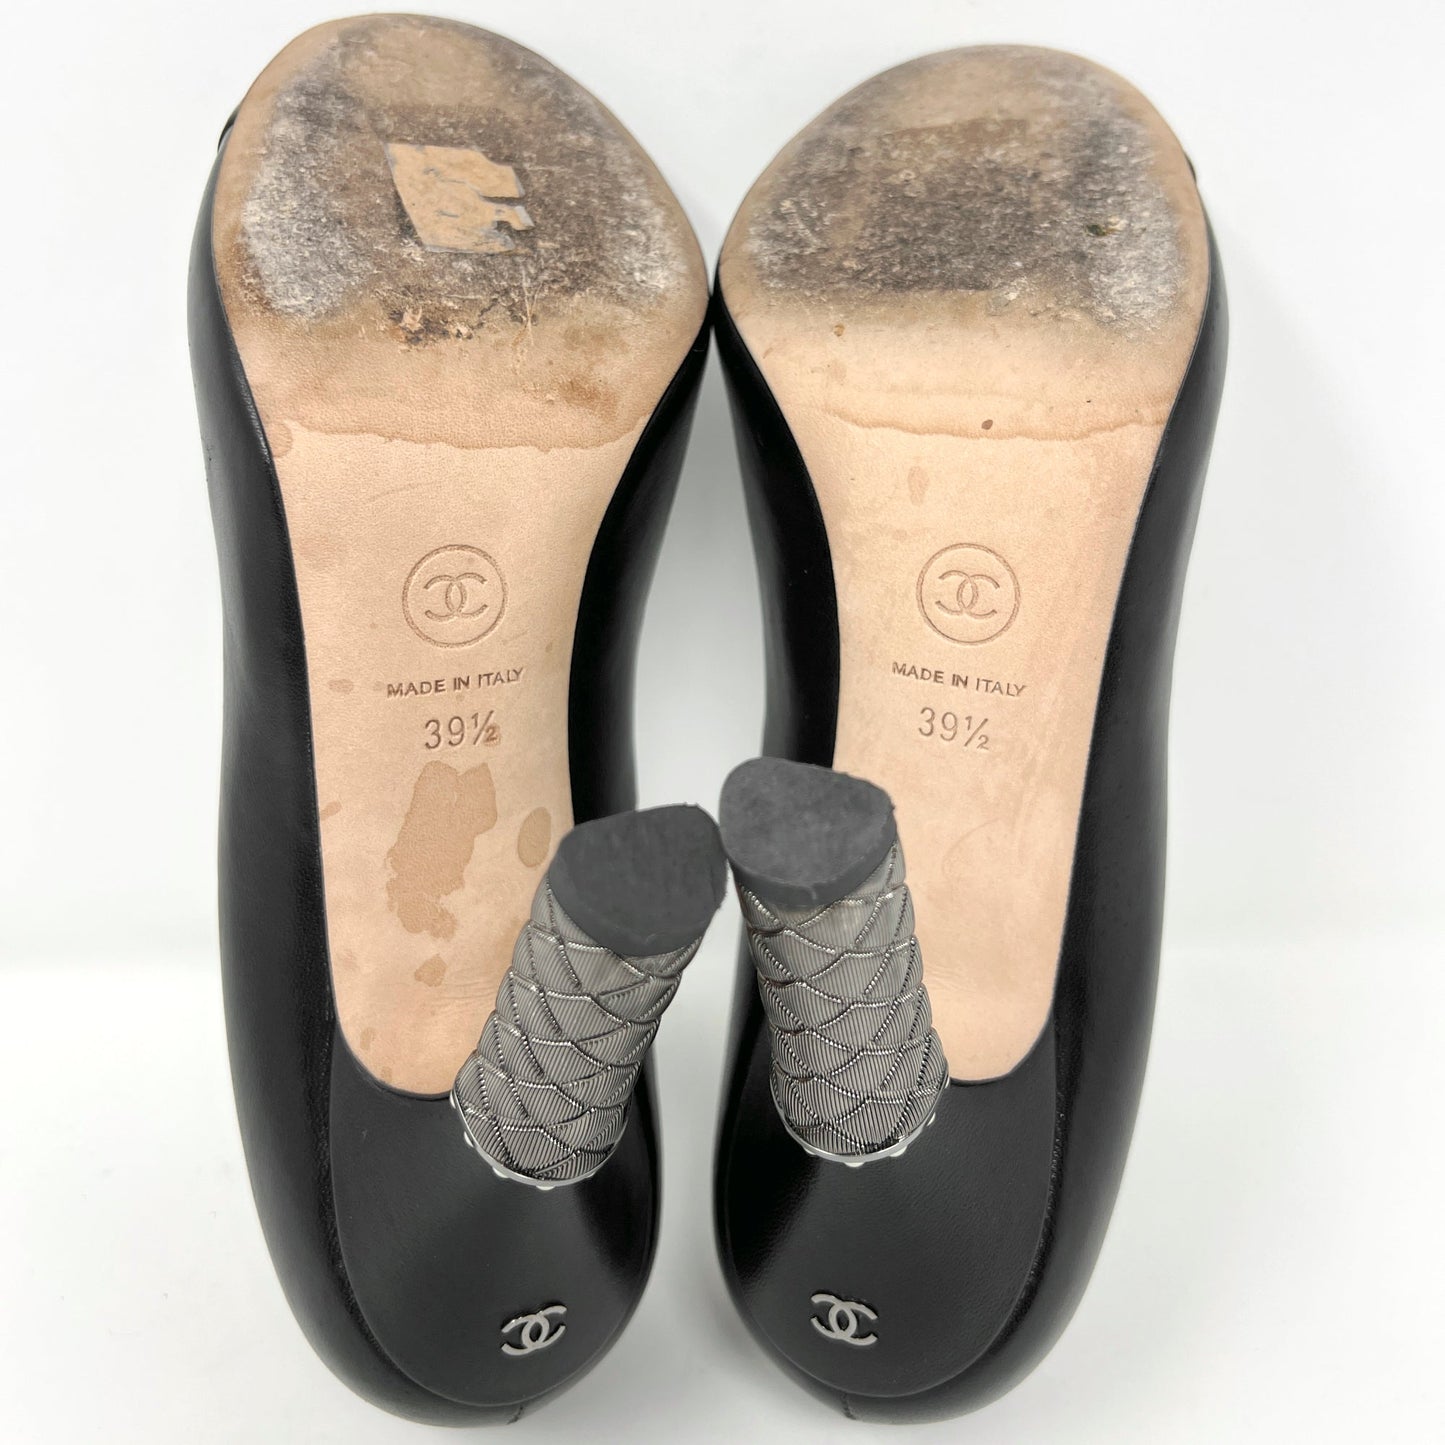 Chanel Black Leather Round Toe Metal Pearl CC Interlocking Logo Heels Pumps Size EU 39.5